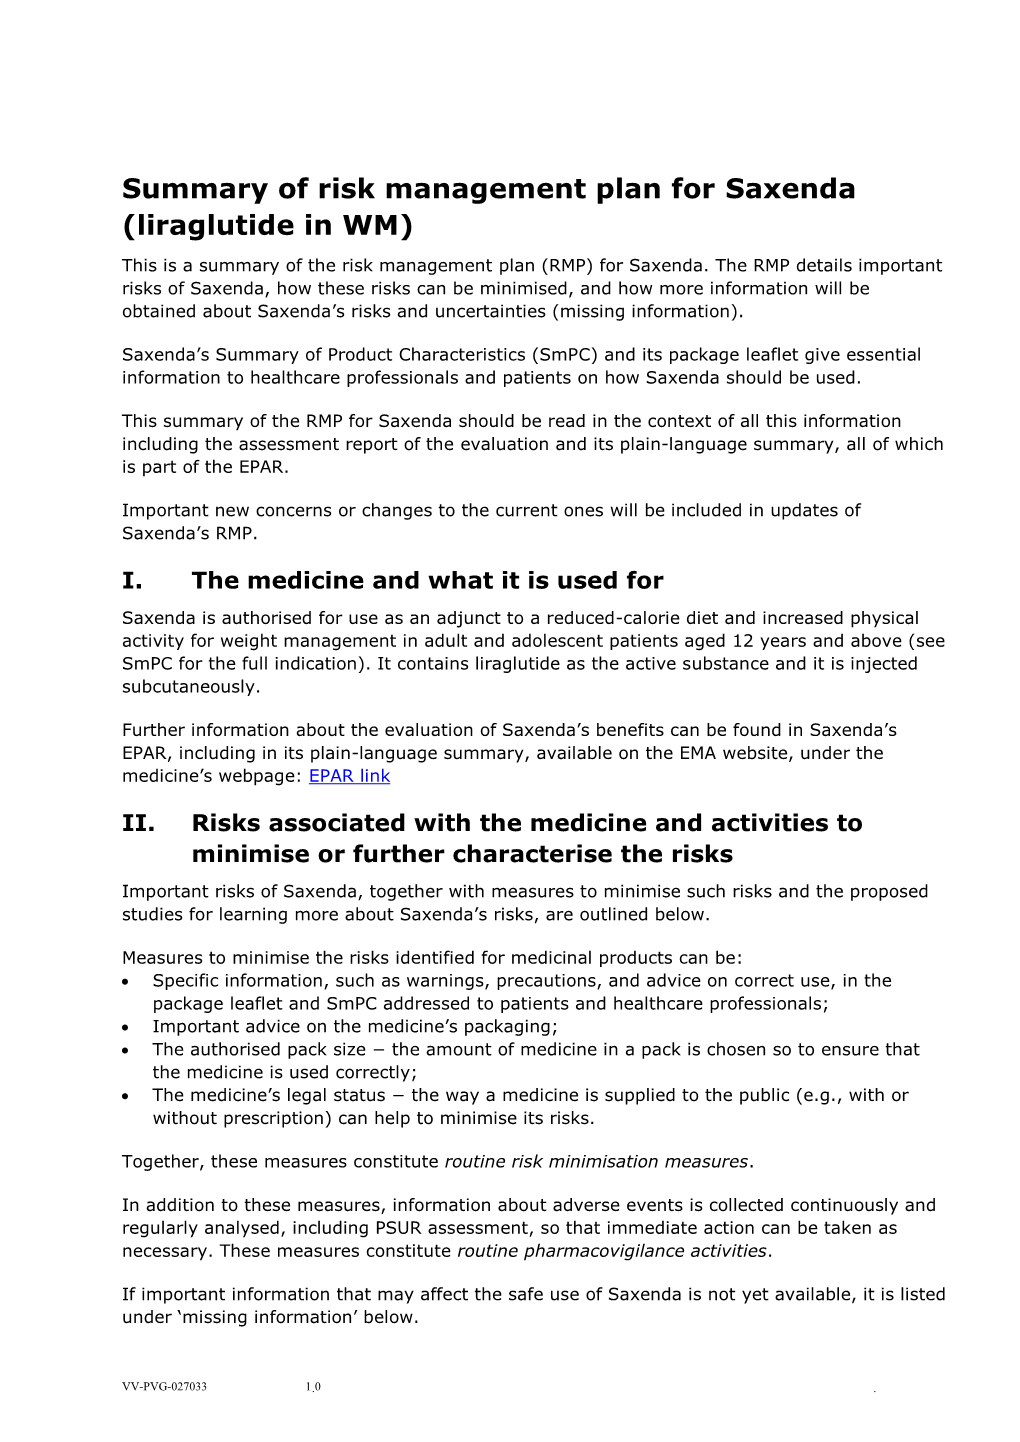 Summary of Risk Management Plan for Saxenda (Liraglutide in WM)